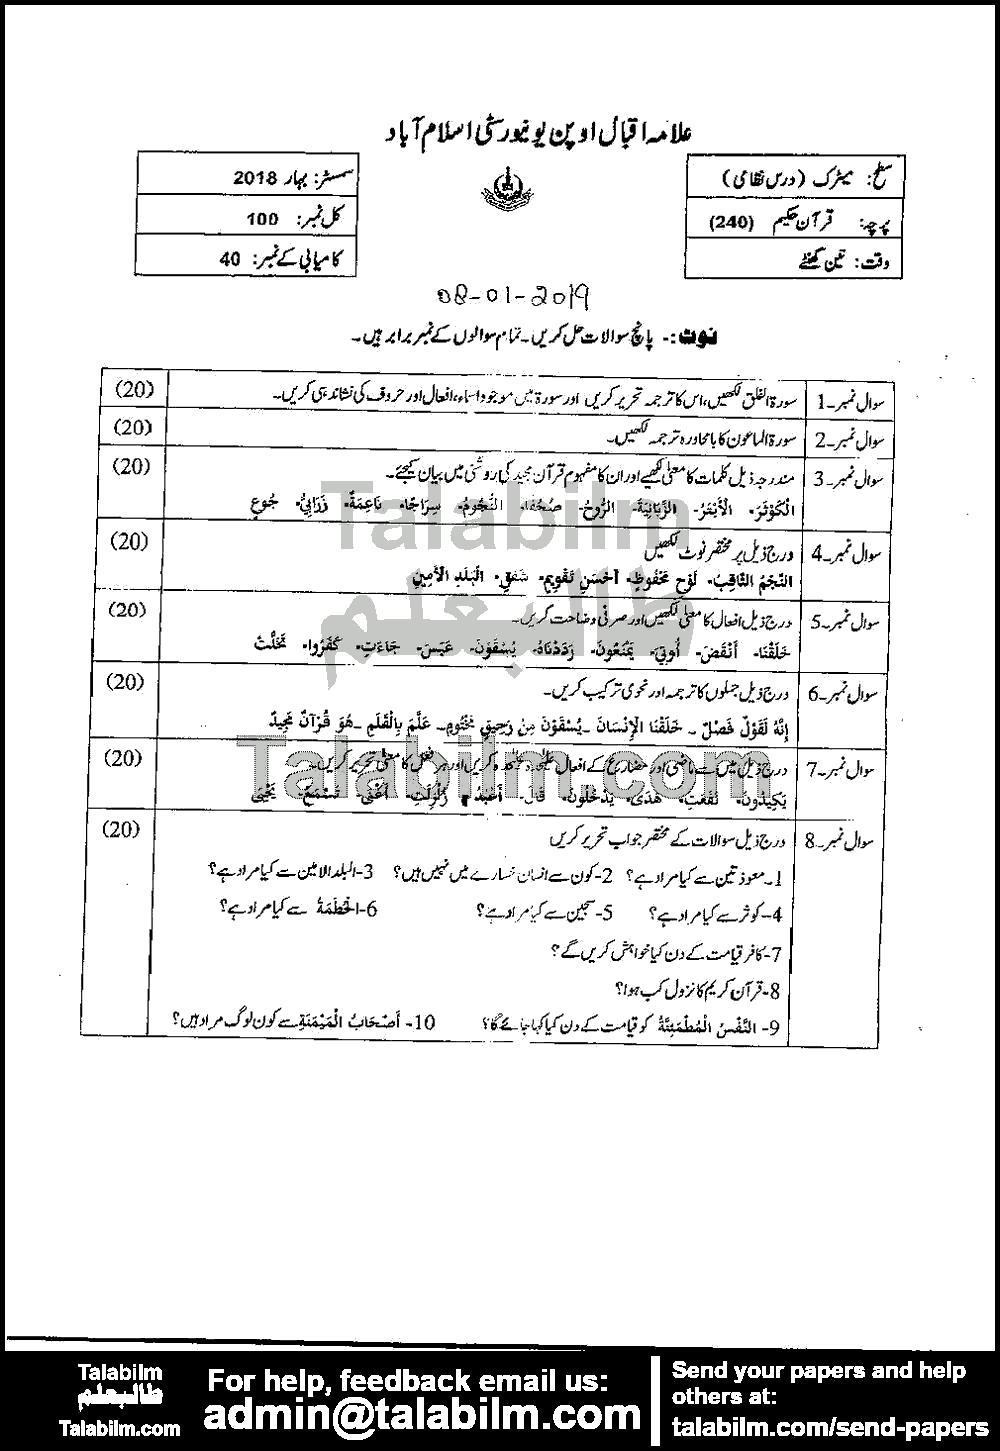 Quran-e-Hakeem 240 past paper for Spring 2018